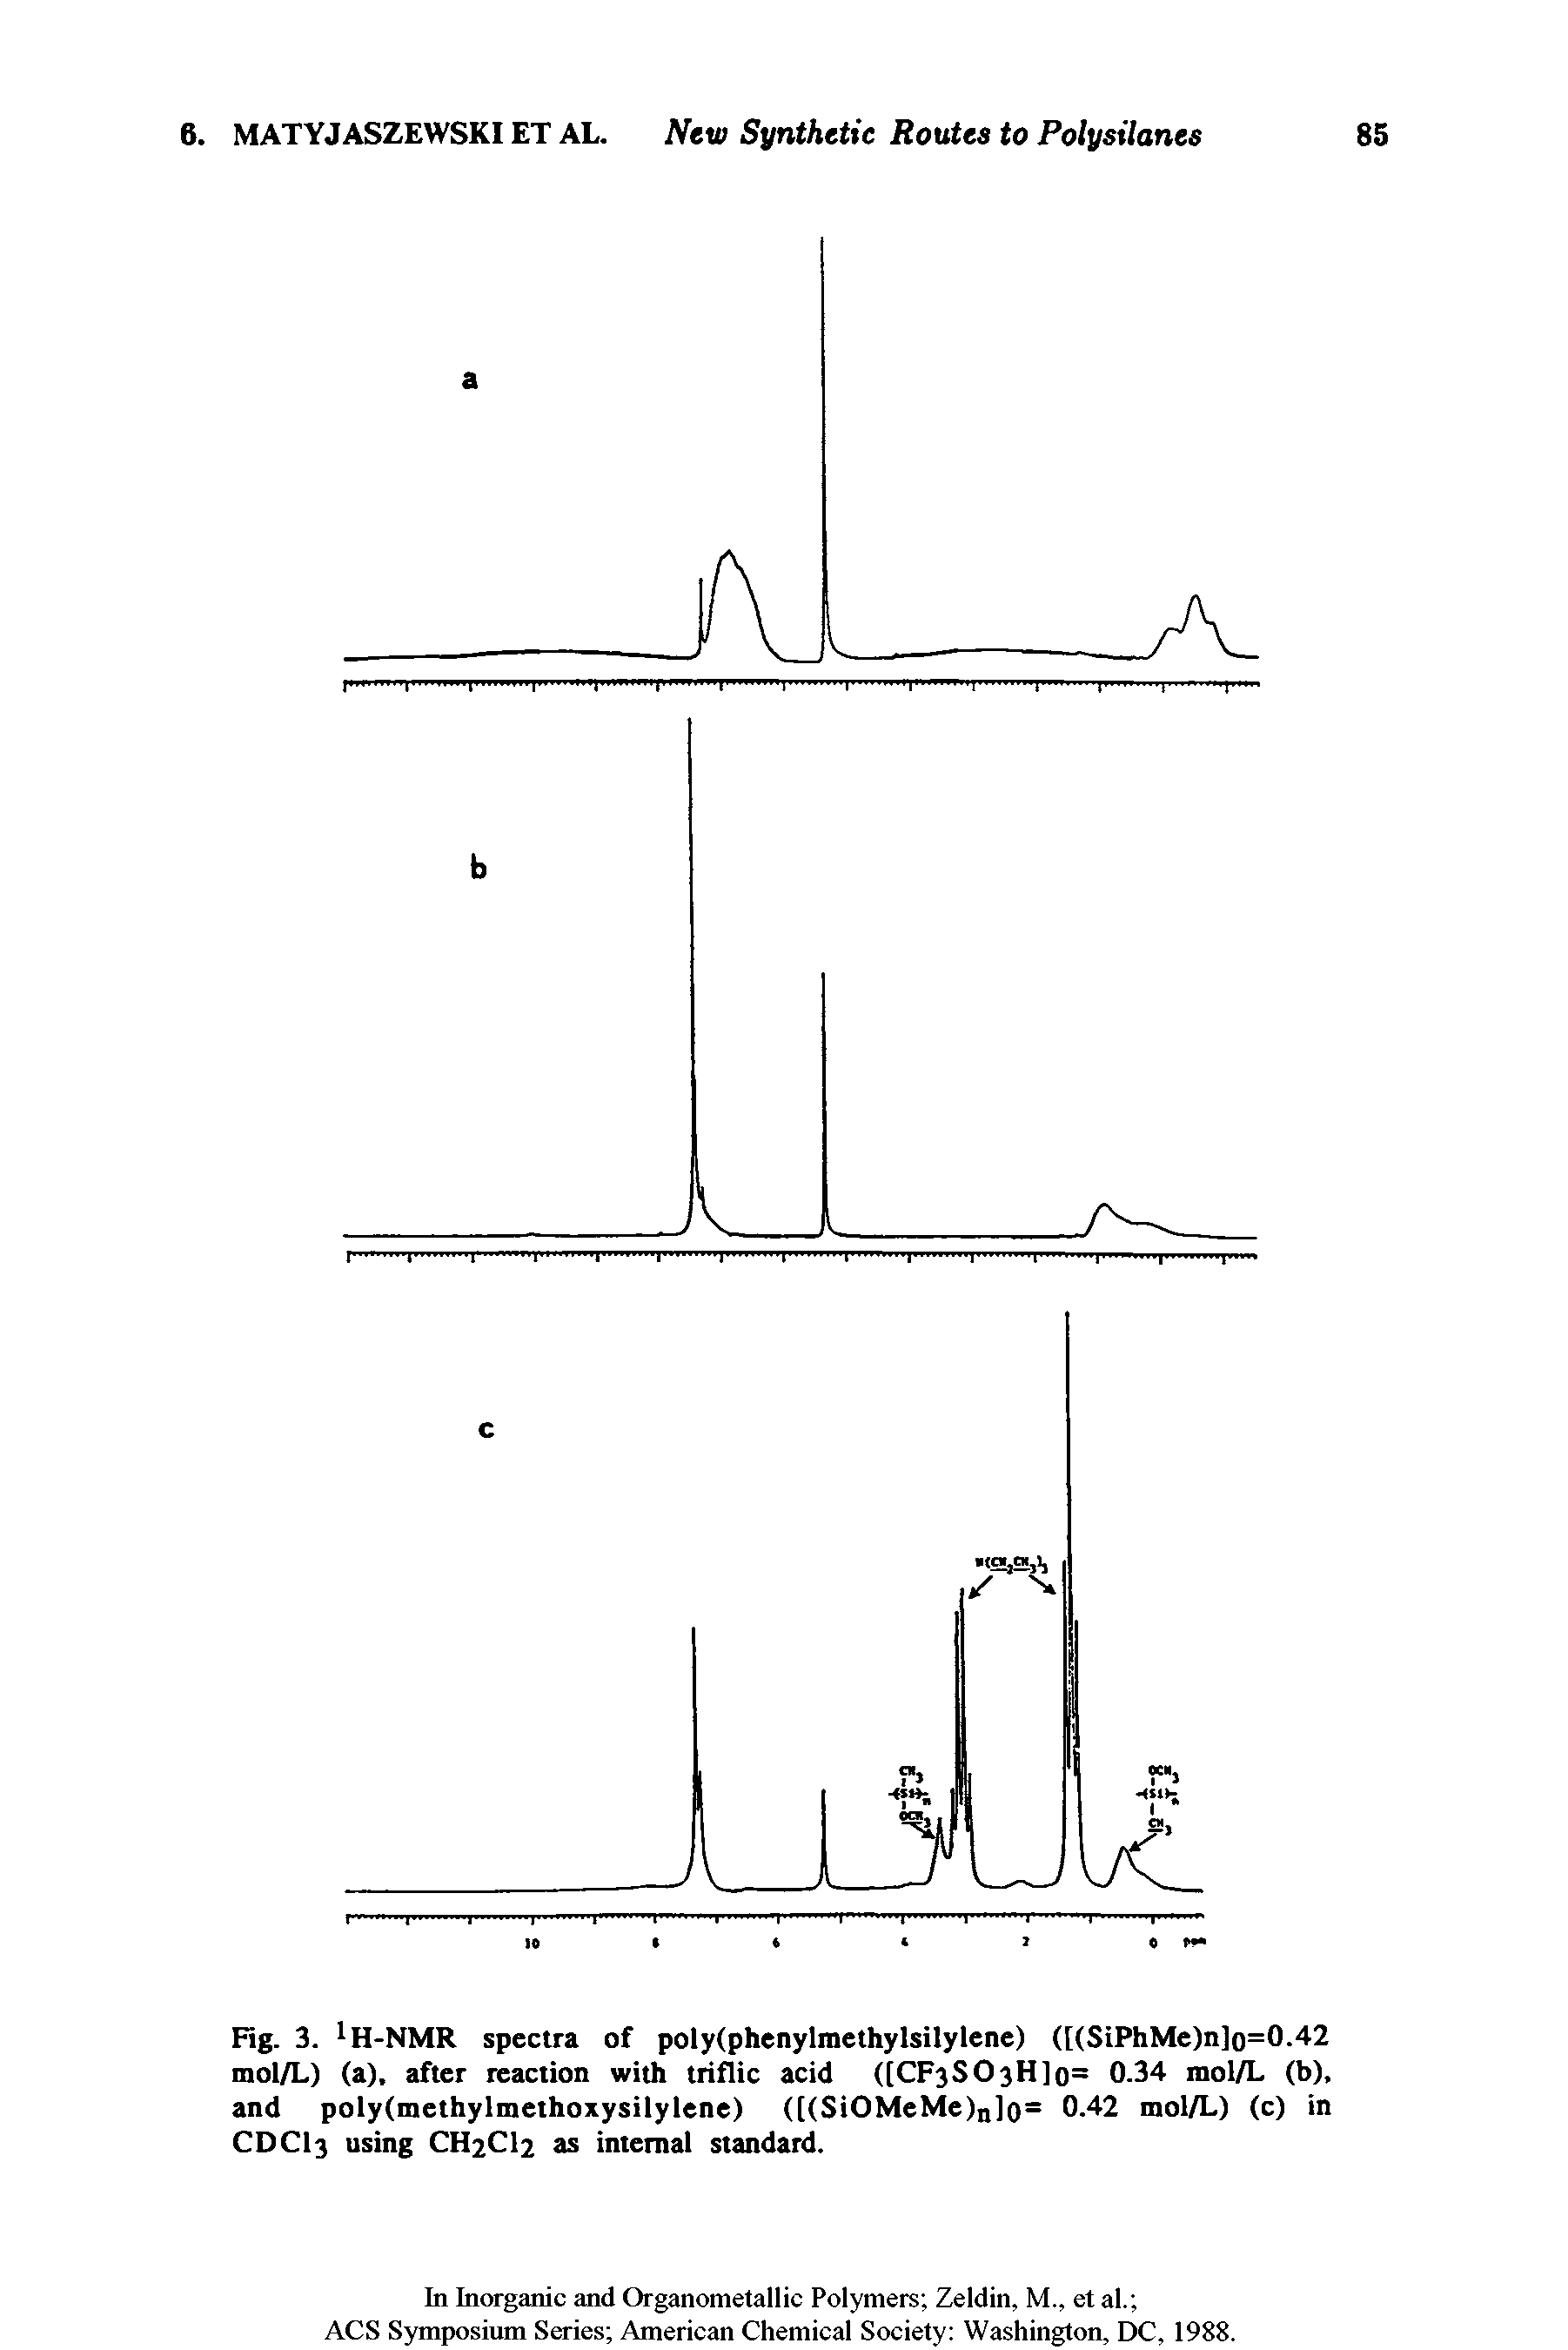 Fig. 3. -NMR spectra of poly(phenylmethylsilylene) ([(SiPhMe)n]o=0.42 mol/L) (a), after reaction with triflic acid ([CF3S03H]o= 0.34 mol/L (b), and poly(methylmethoxysilylene) ([(SiOMeMe)n]o= 0.42 mol/L) (c) in CDCI3 using CH2CI2 as internal standard.